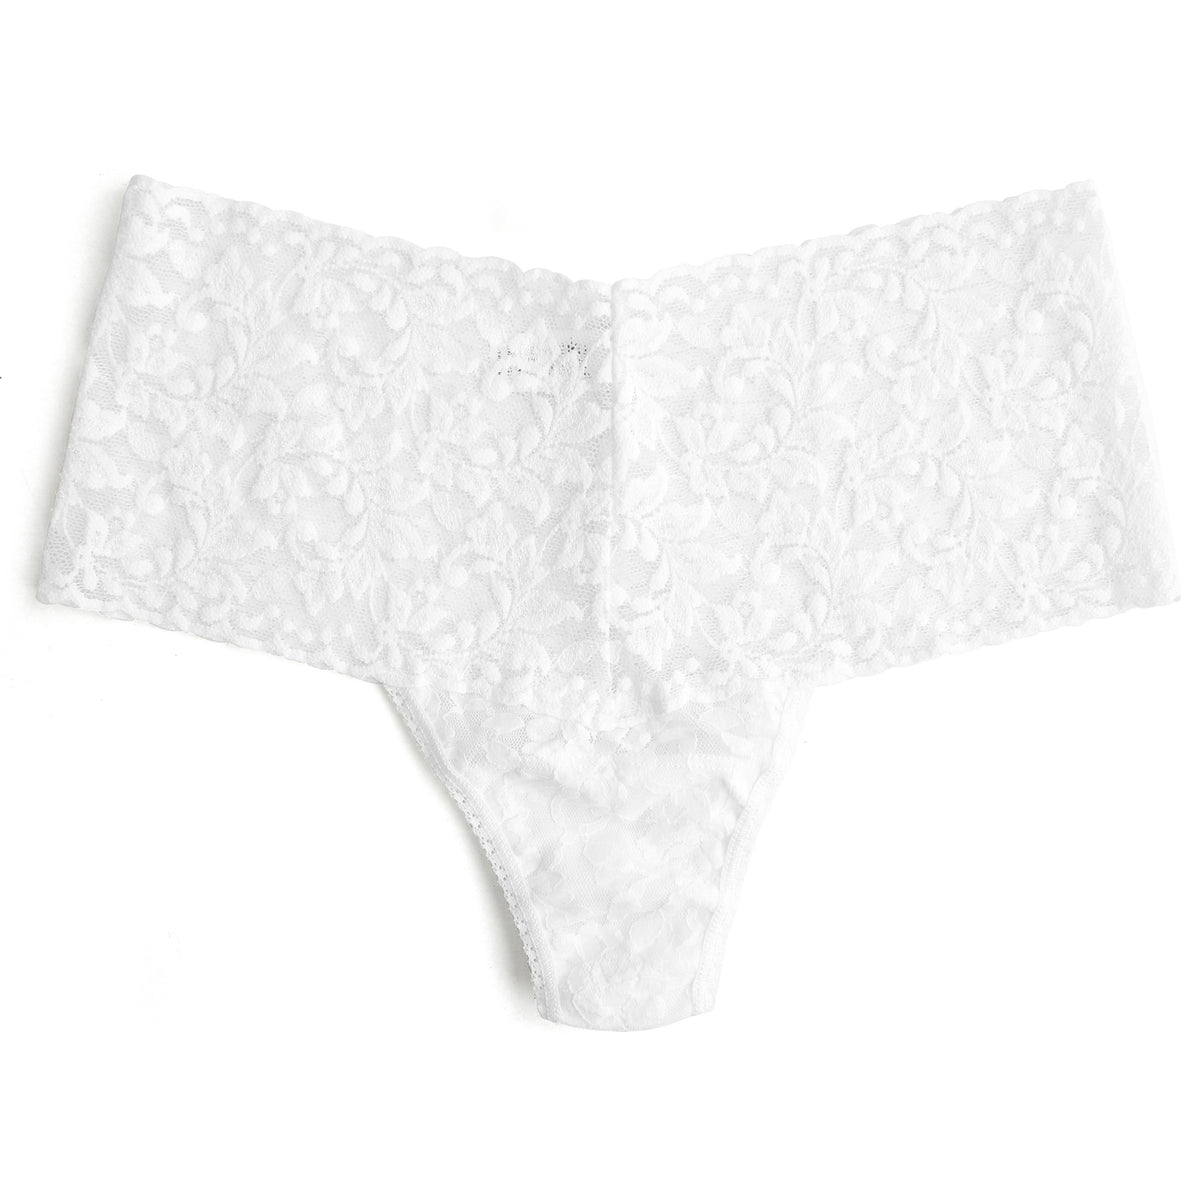 Hanky Panky Retro Lace Thong (9K1926P),White - White,One Size